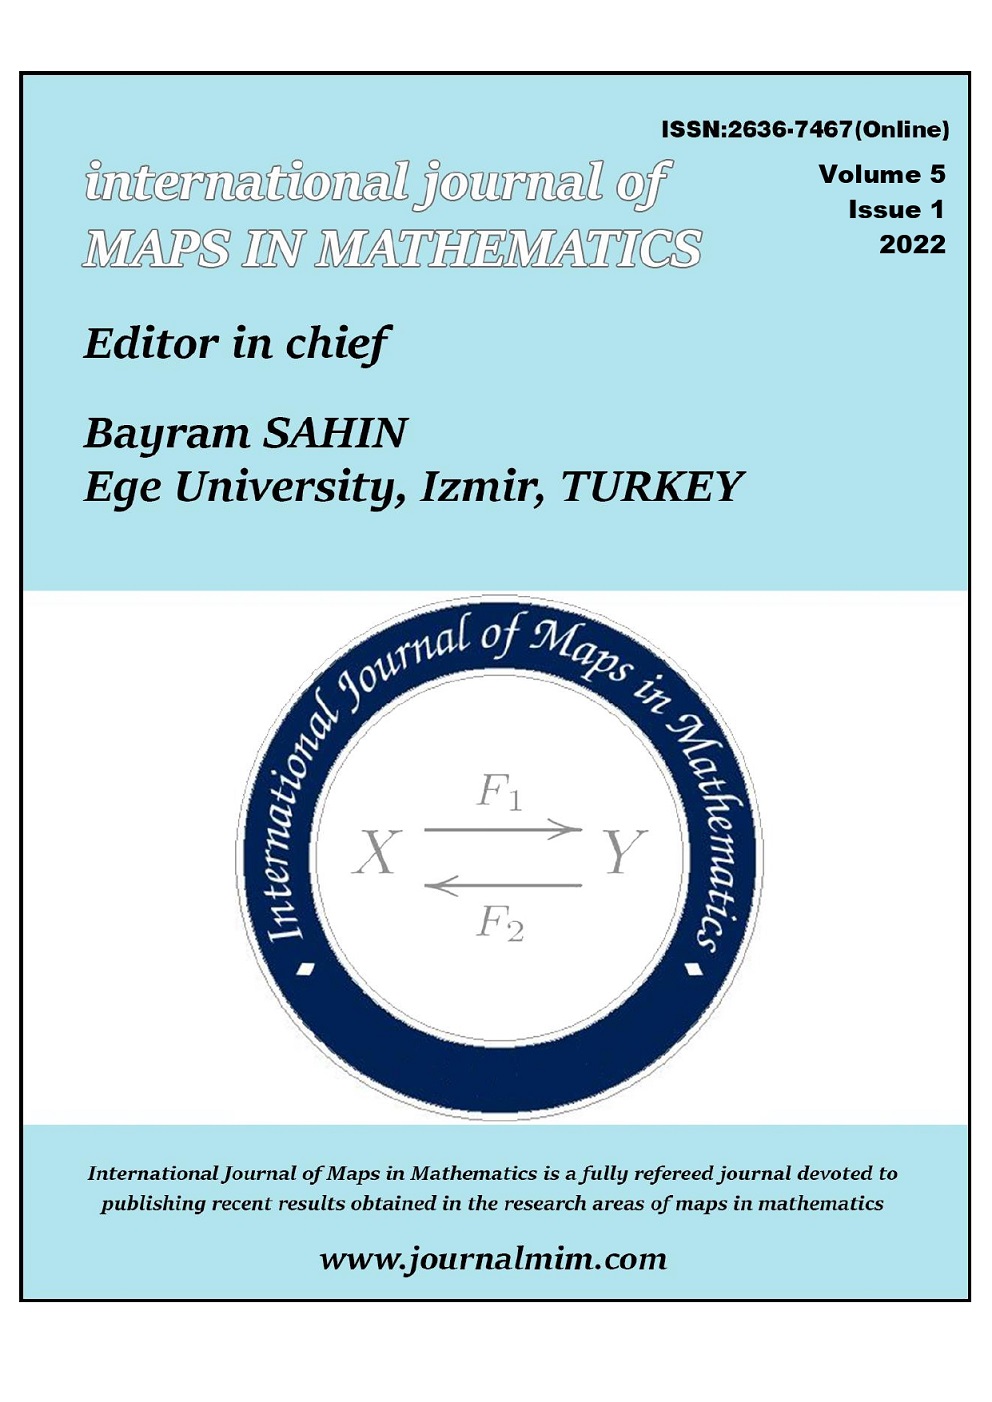 International Journal of Maps in Mathematics volume 5 Issue 1 2022